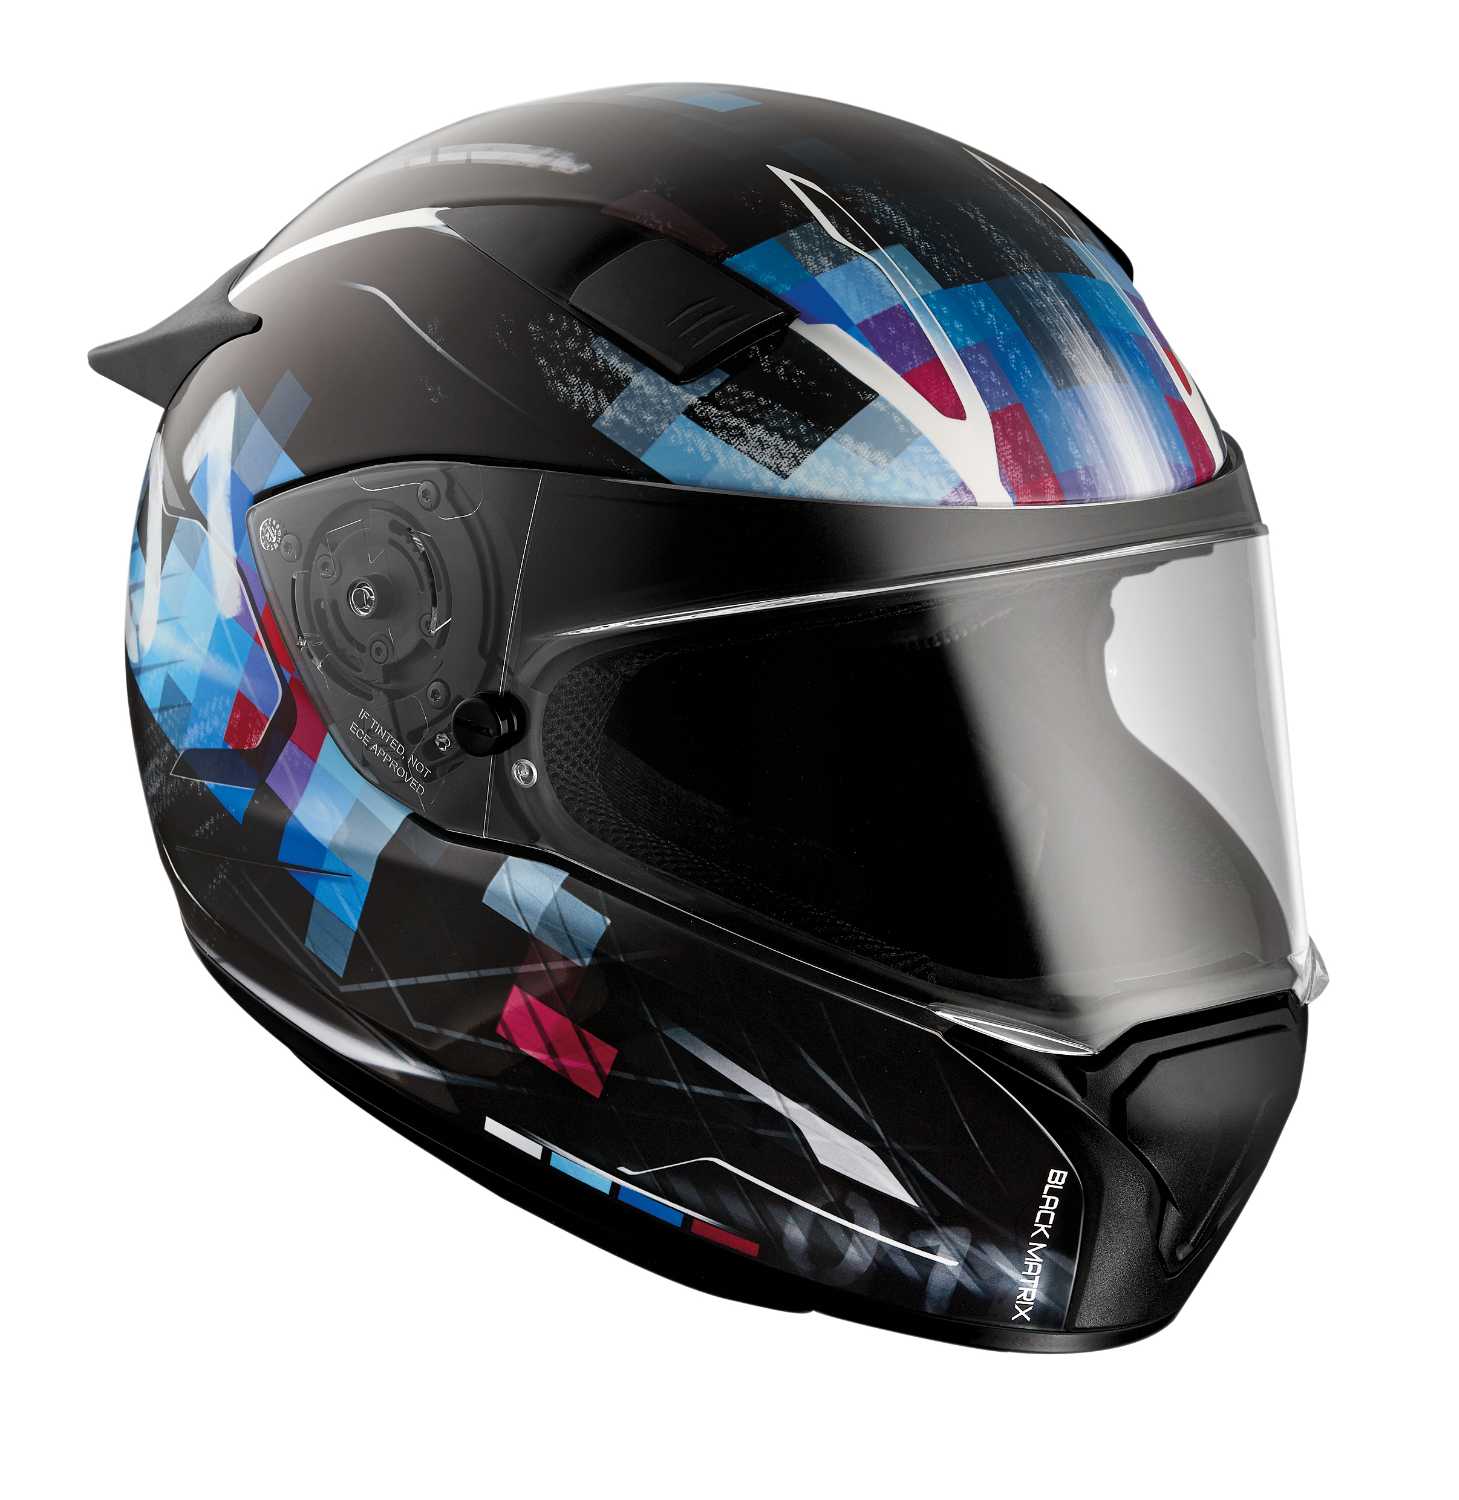 BMW Motorrad Rider's Equipment Ride 2014, Race helmet (11/2013)